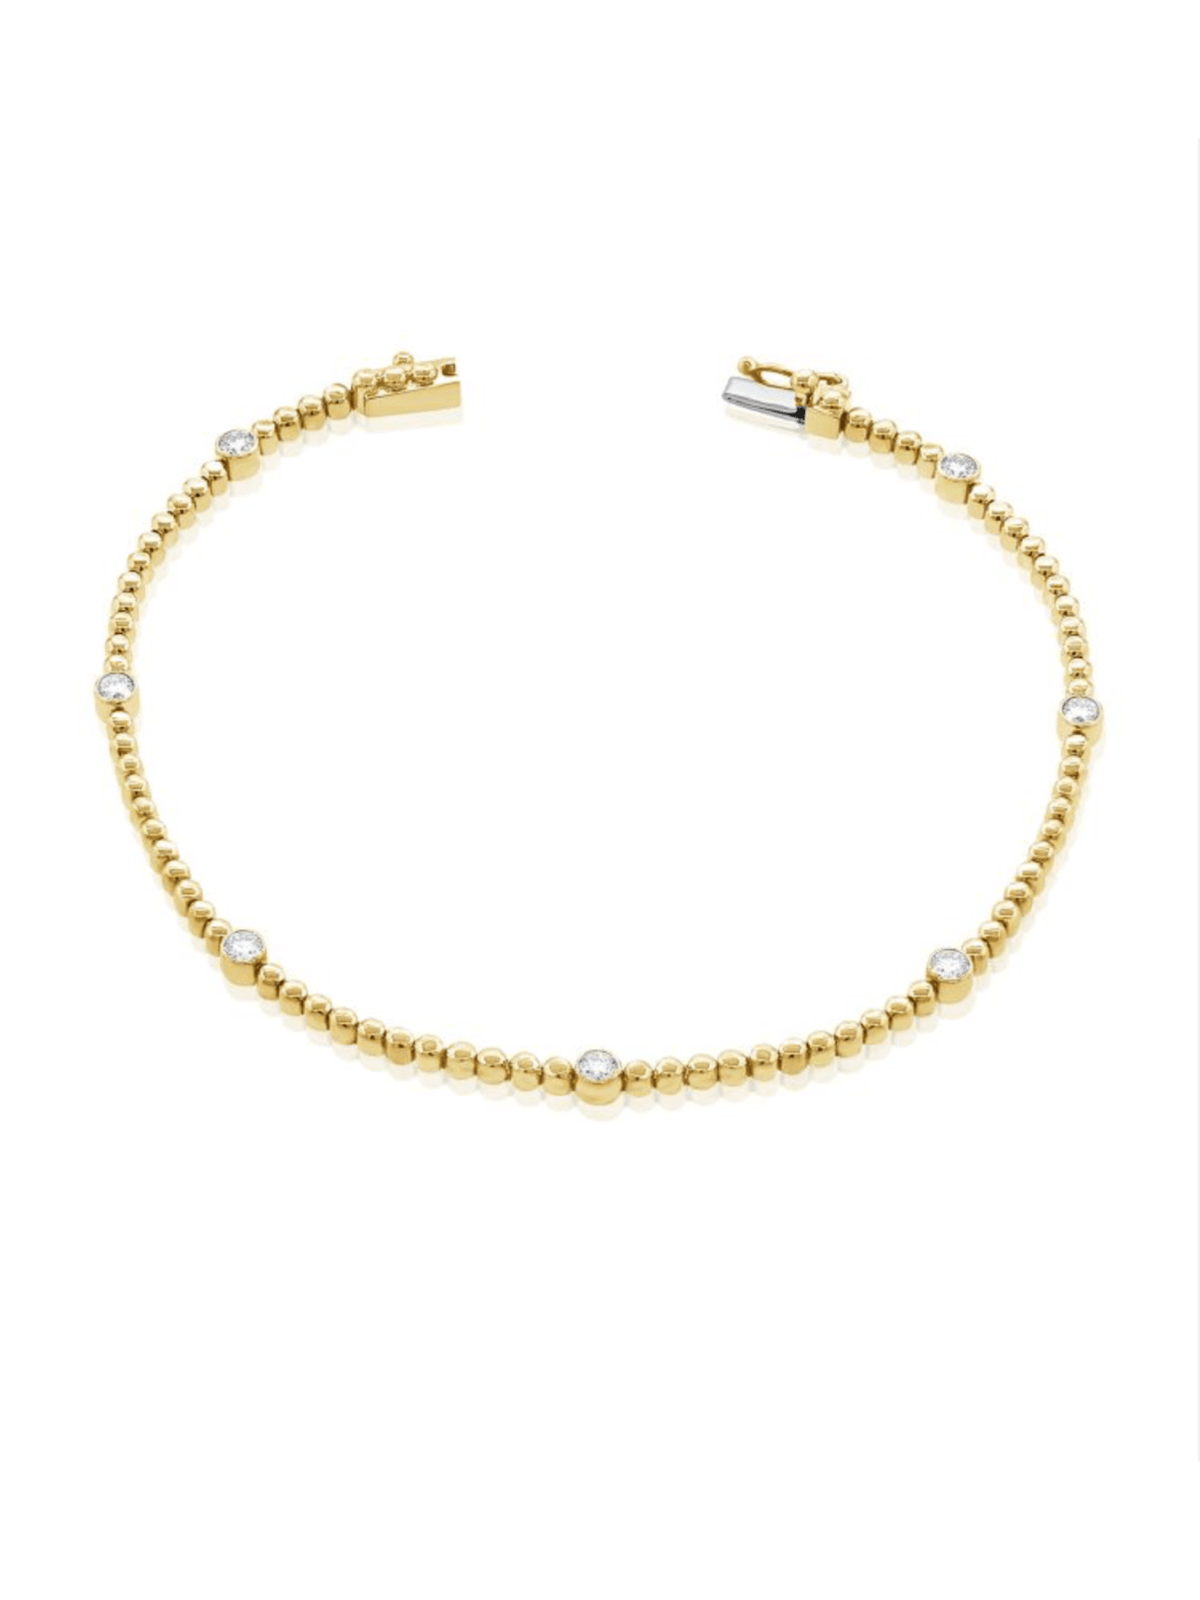 yellow gold beaded bracelet with bezel diamonds with white background